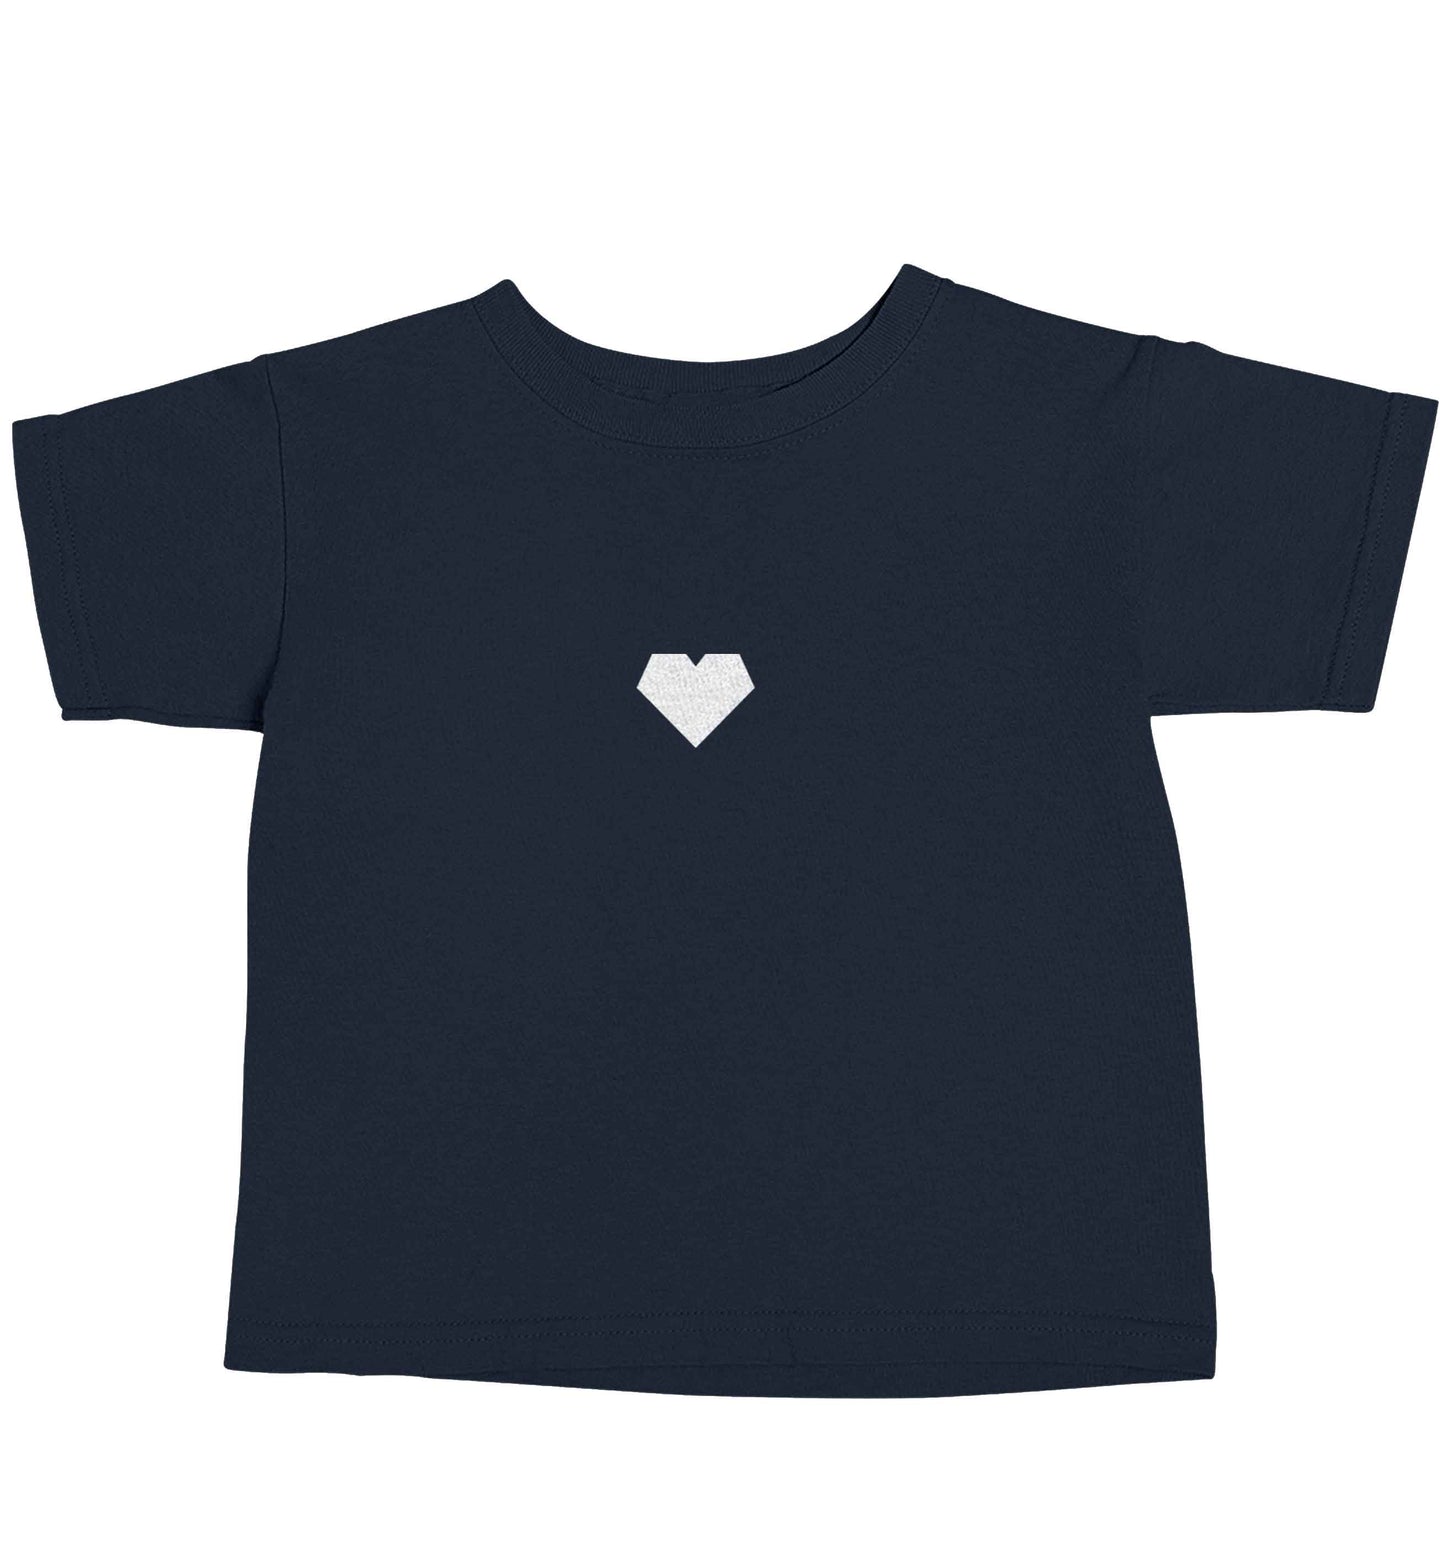 Tiny heart navy baby toddler Tshirt 2 Years